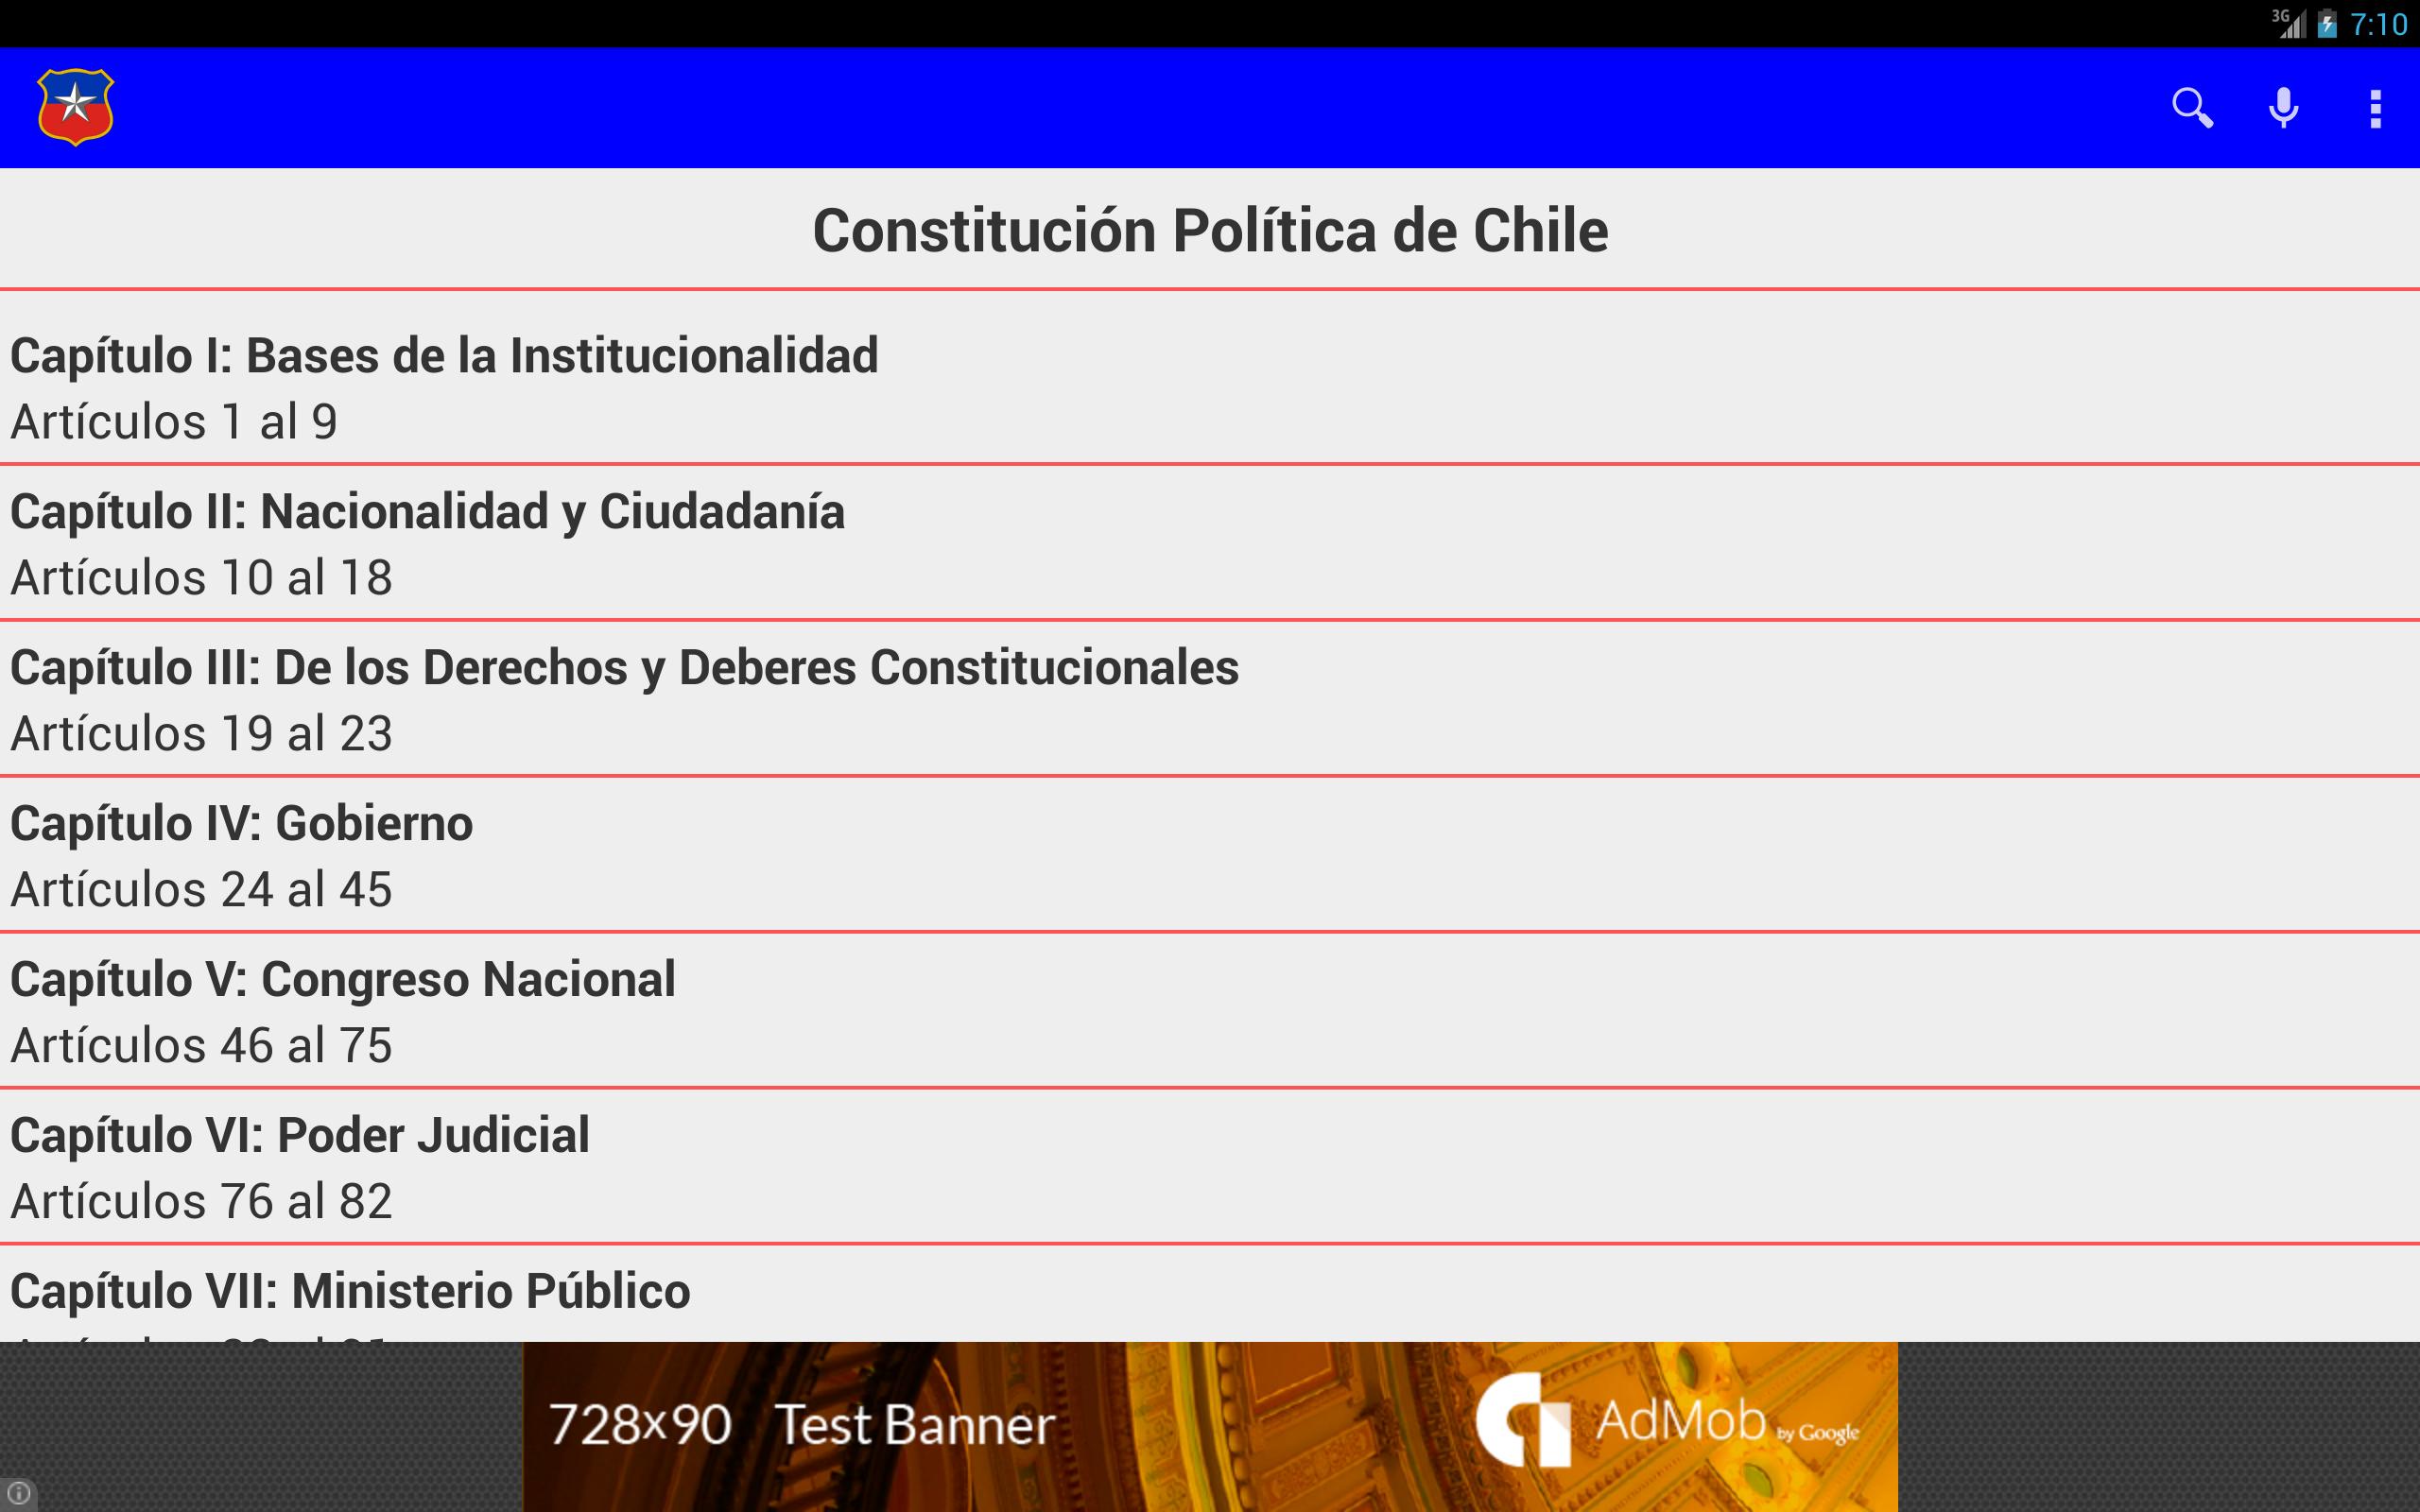 Constitucion De Chile For Android Apk Download - banner de 728 x 90 roblox